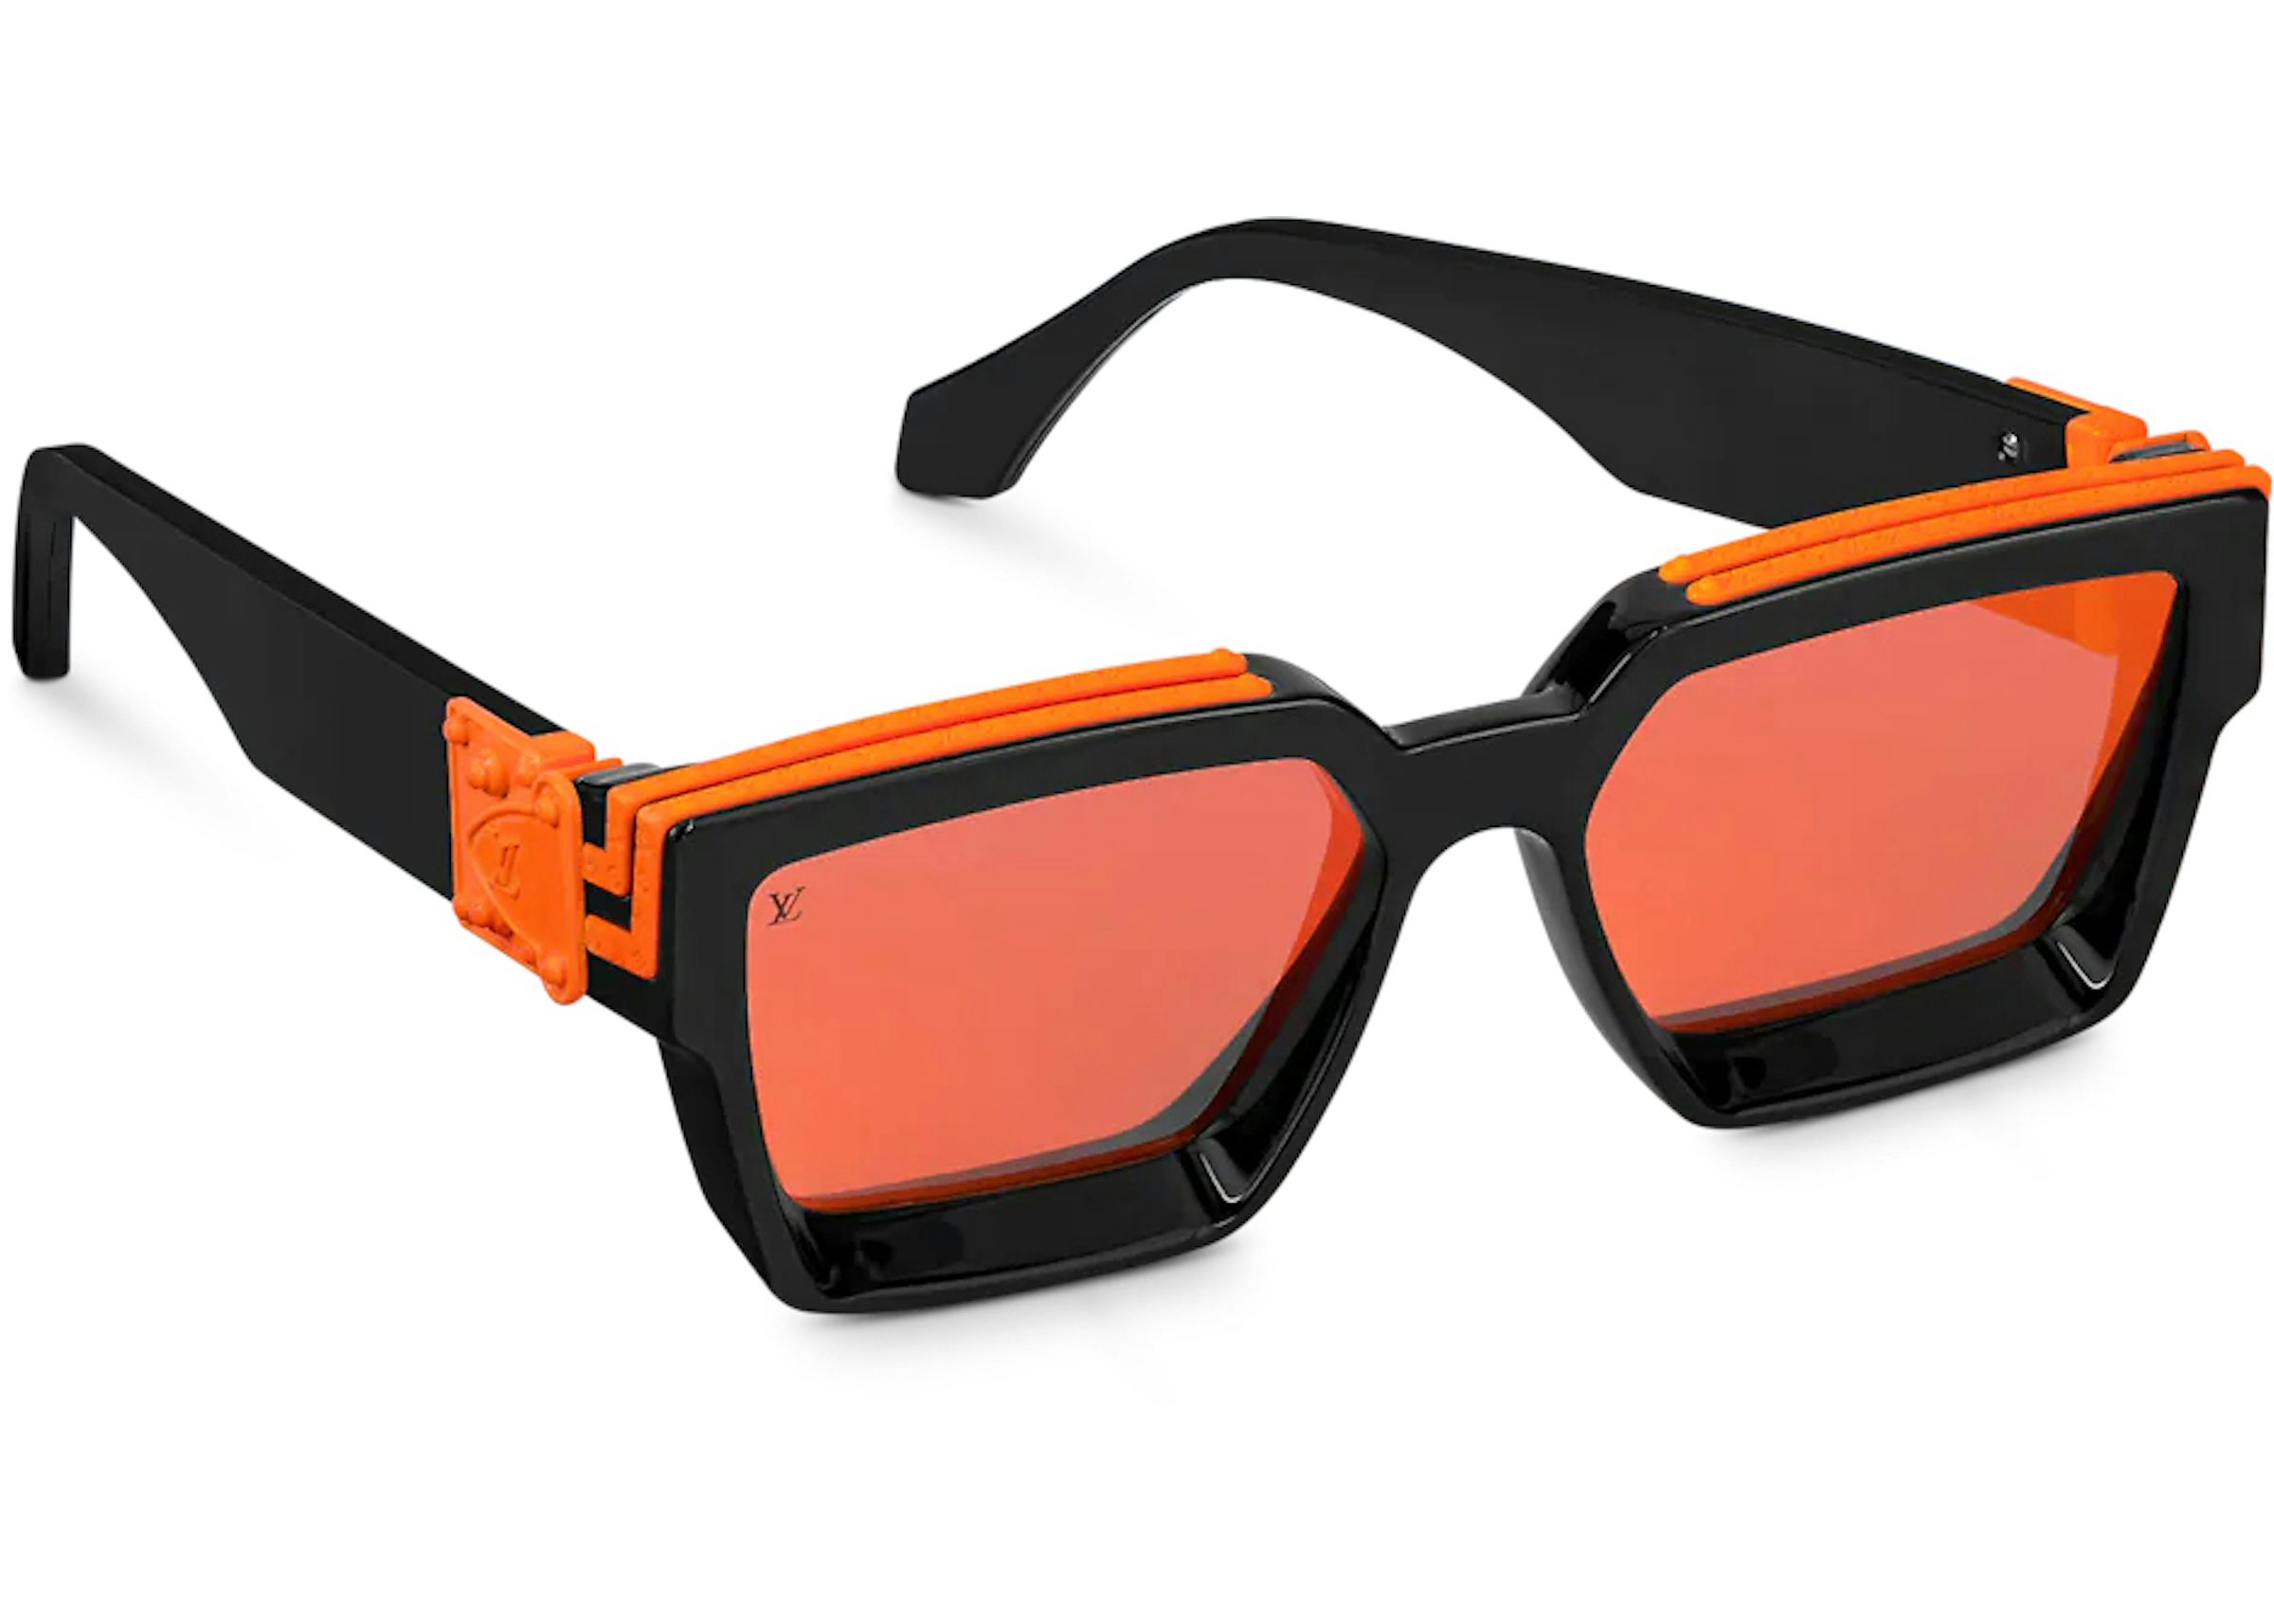 Buy Louis Vuitton Sunglasses Accessories - Color Black - StockX